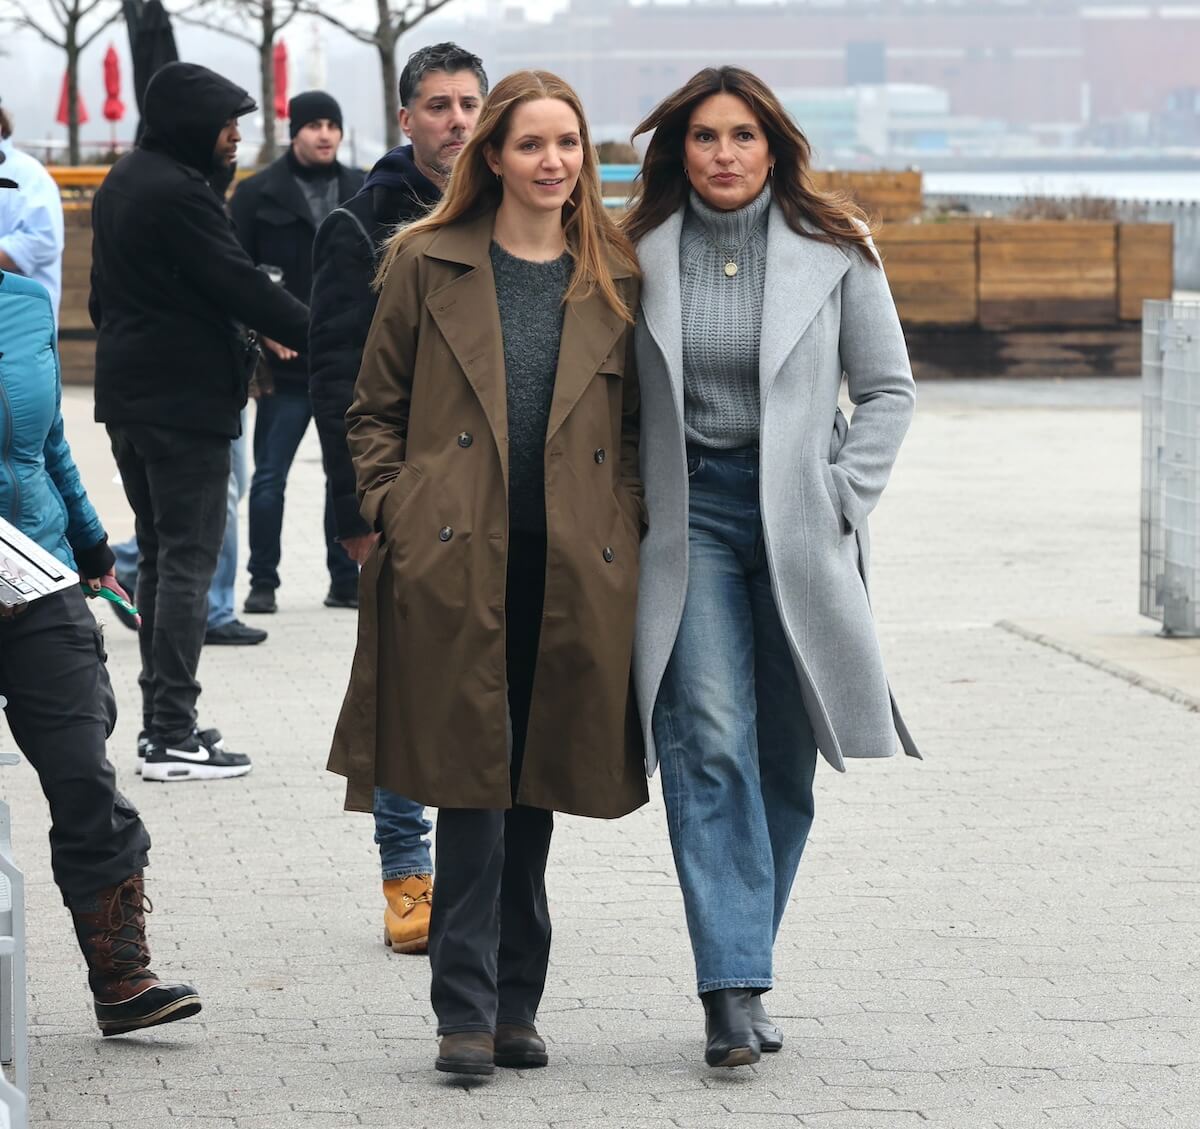 Jordana Spiro and Mariska Hargitay walking in NYC while shooting 'Law & Order: SVU'